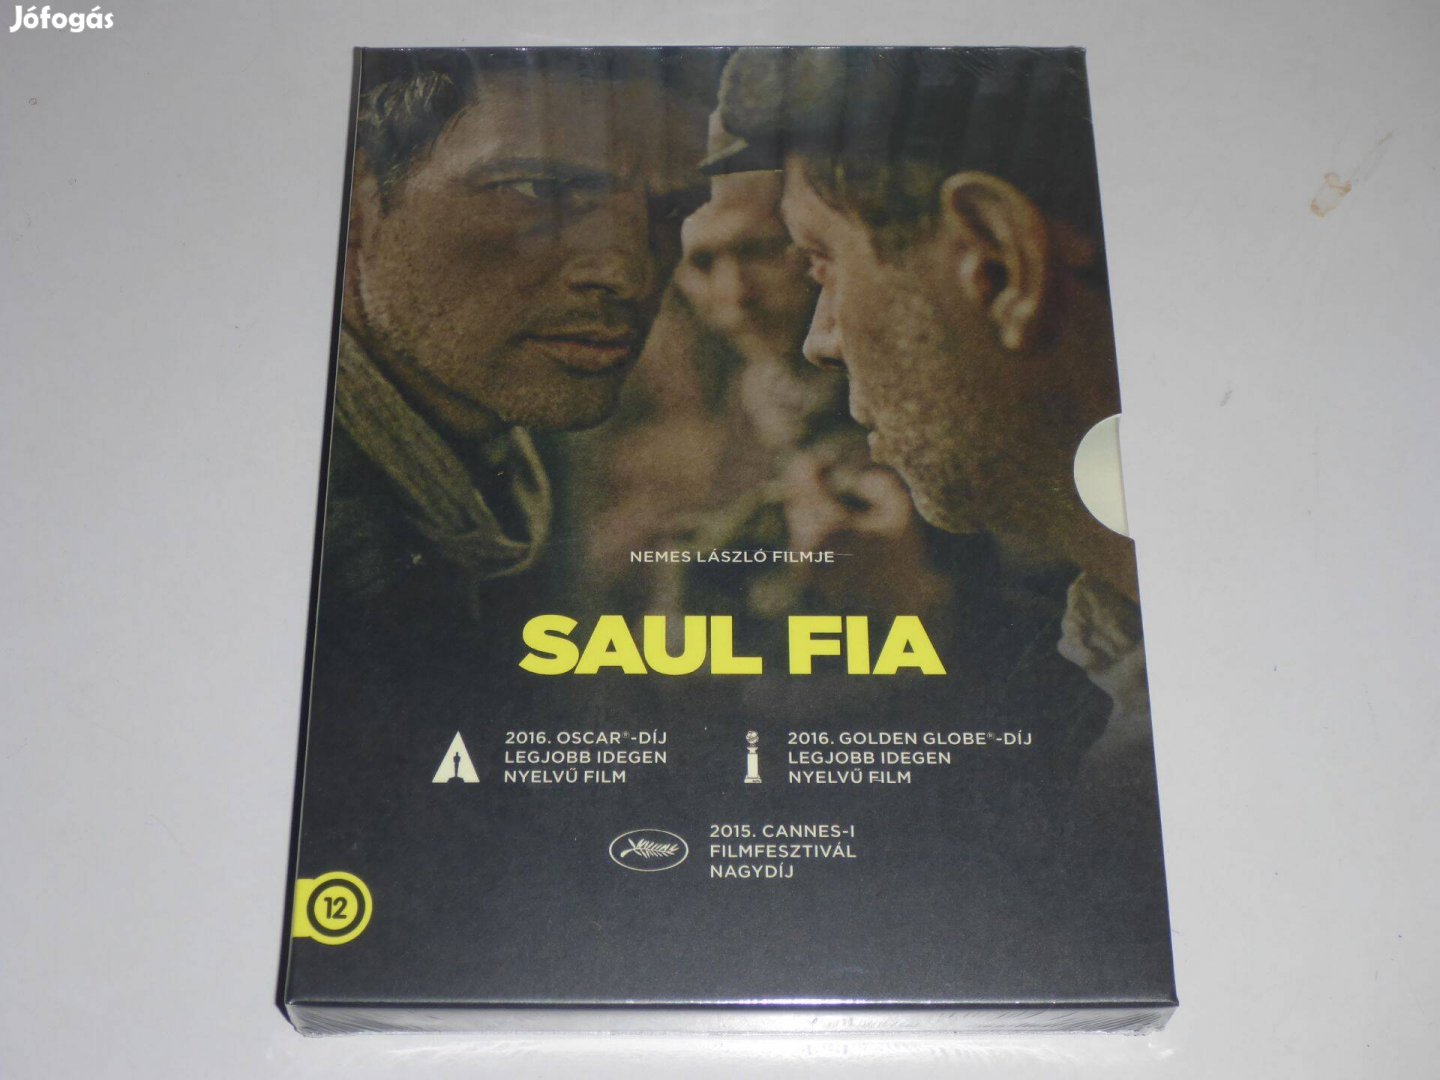 Saul fia - duplalemezes, extra vált. ( digipack ) DVD film ;